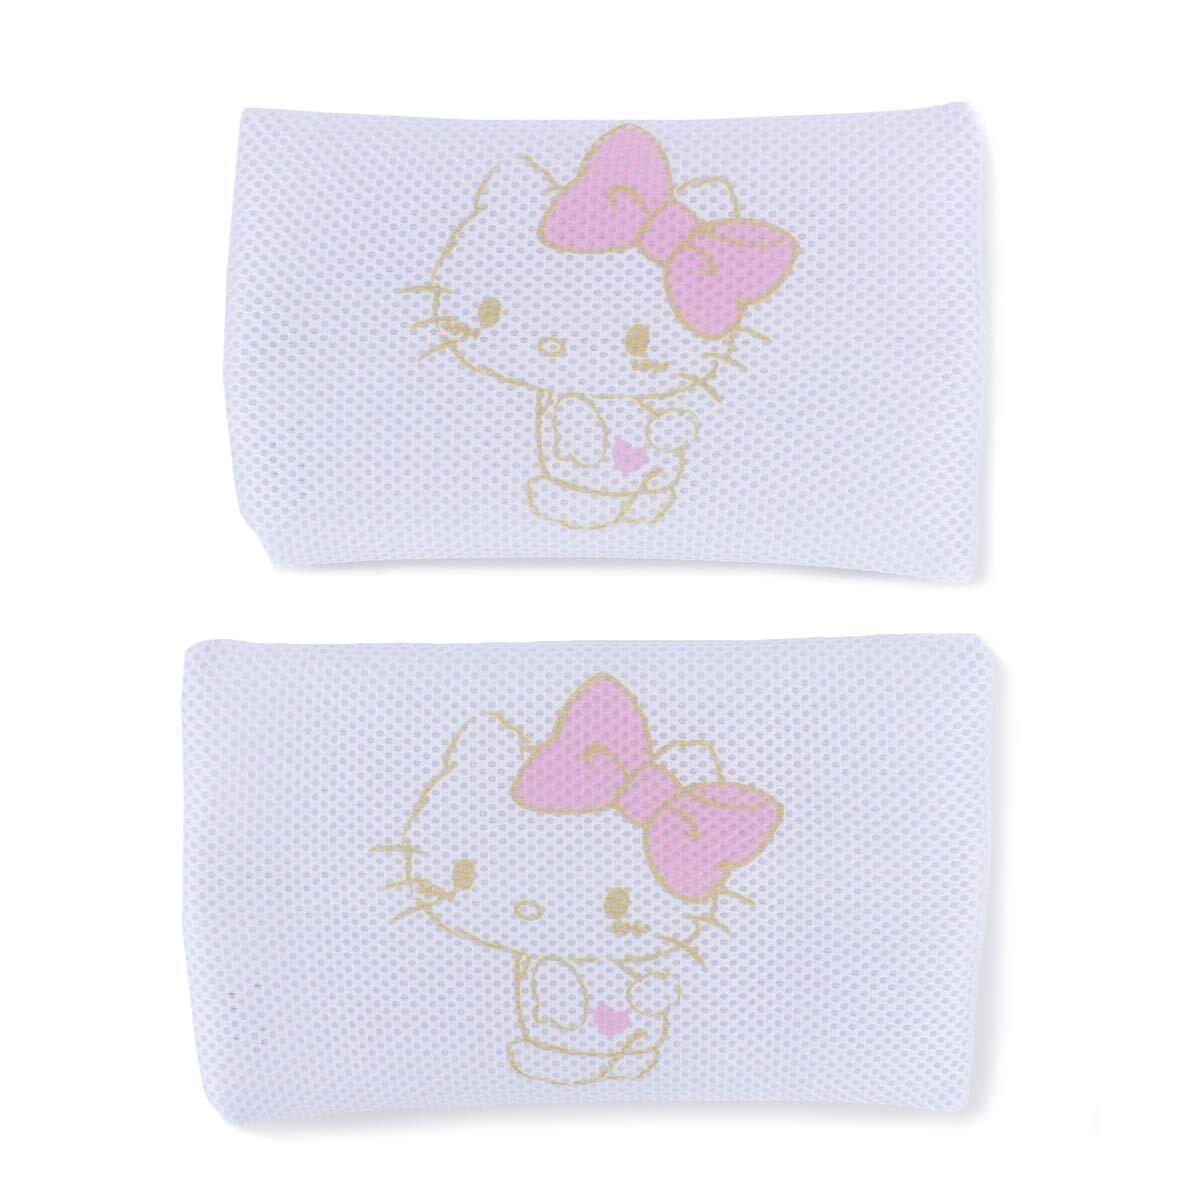 Yasuda Trading Mask Laundry Net Hello Kitty Set of 2 Large and Small 301